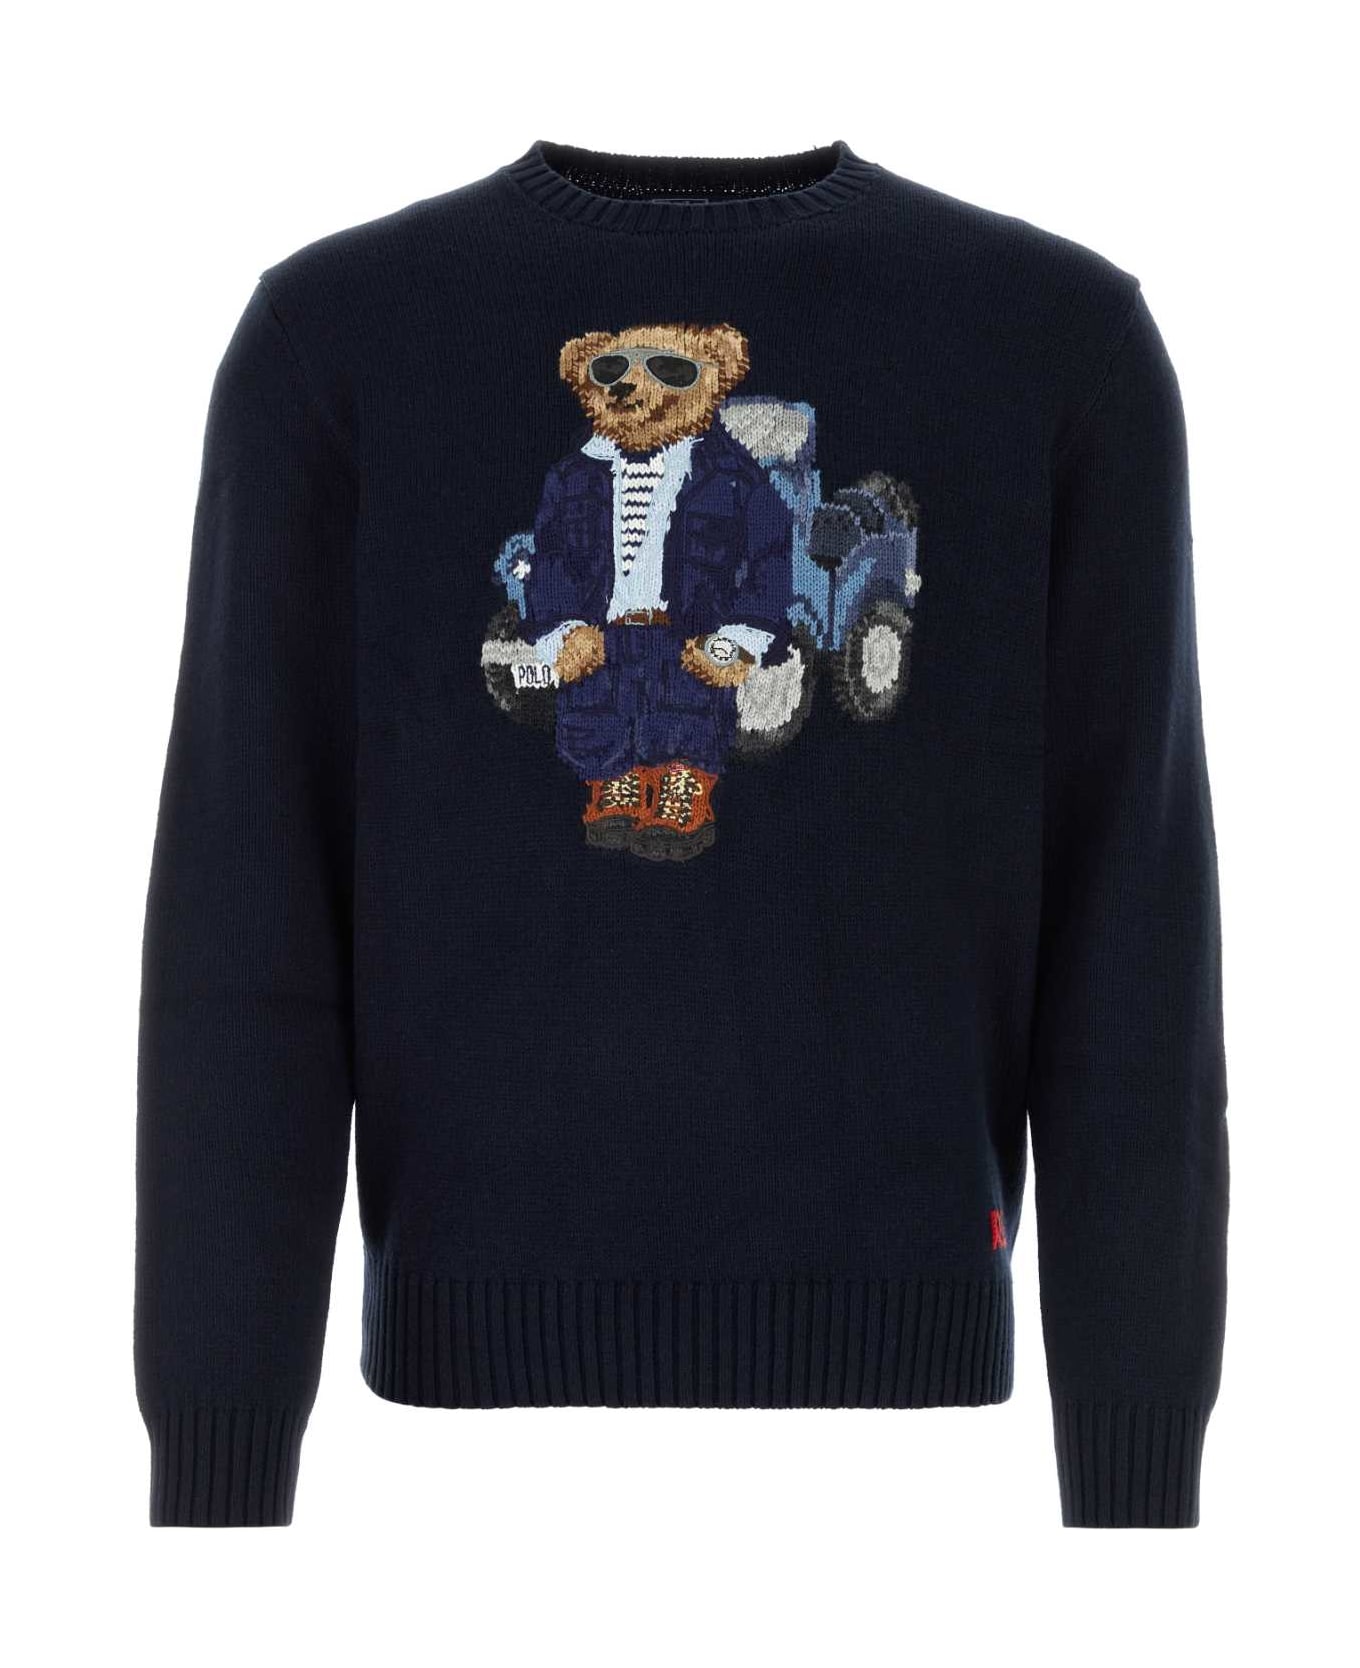 Polo Ralph Lauren Navy Blue Cotton Sweater - NAVY